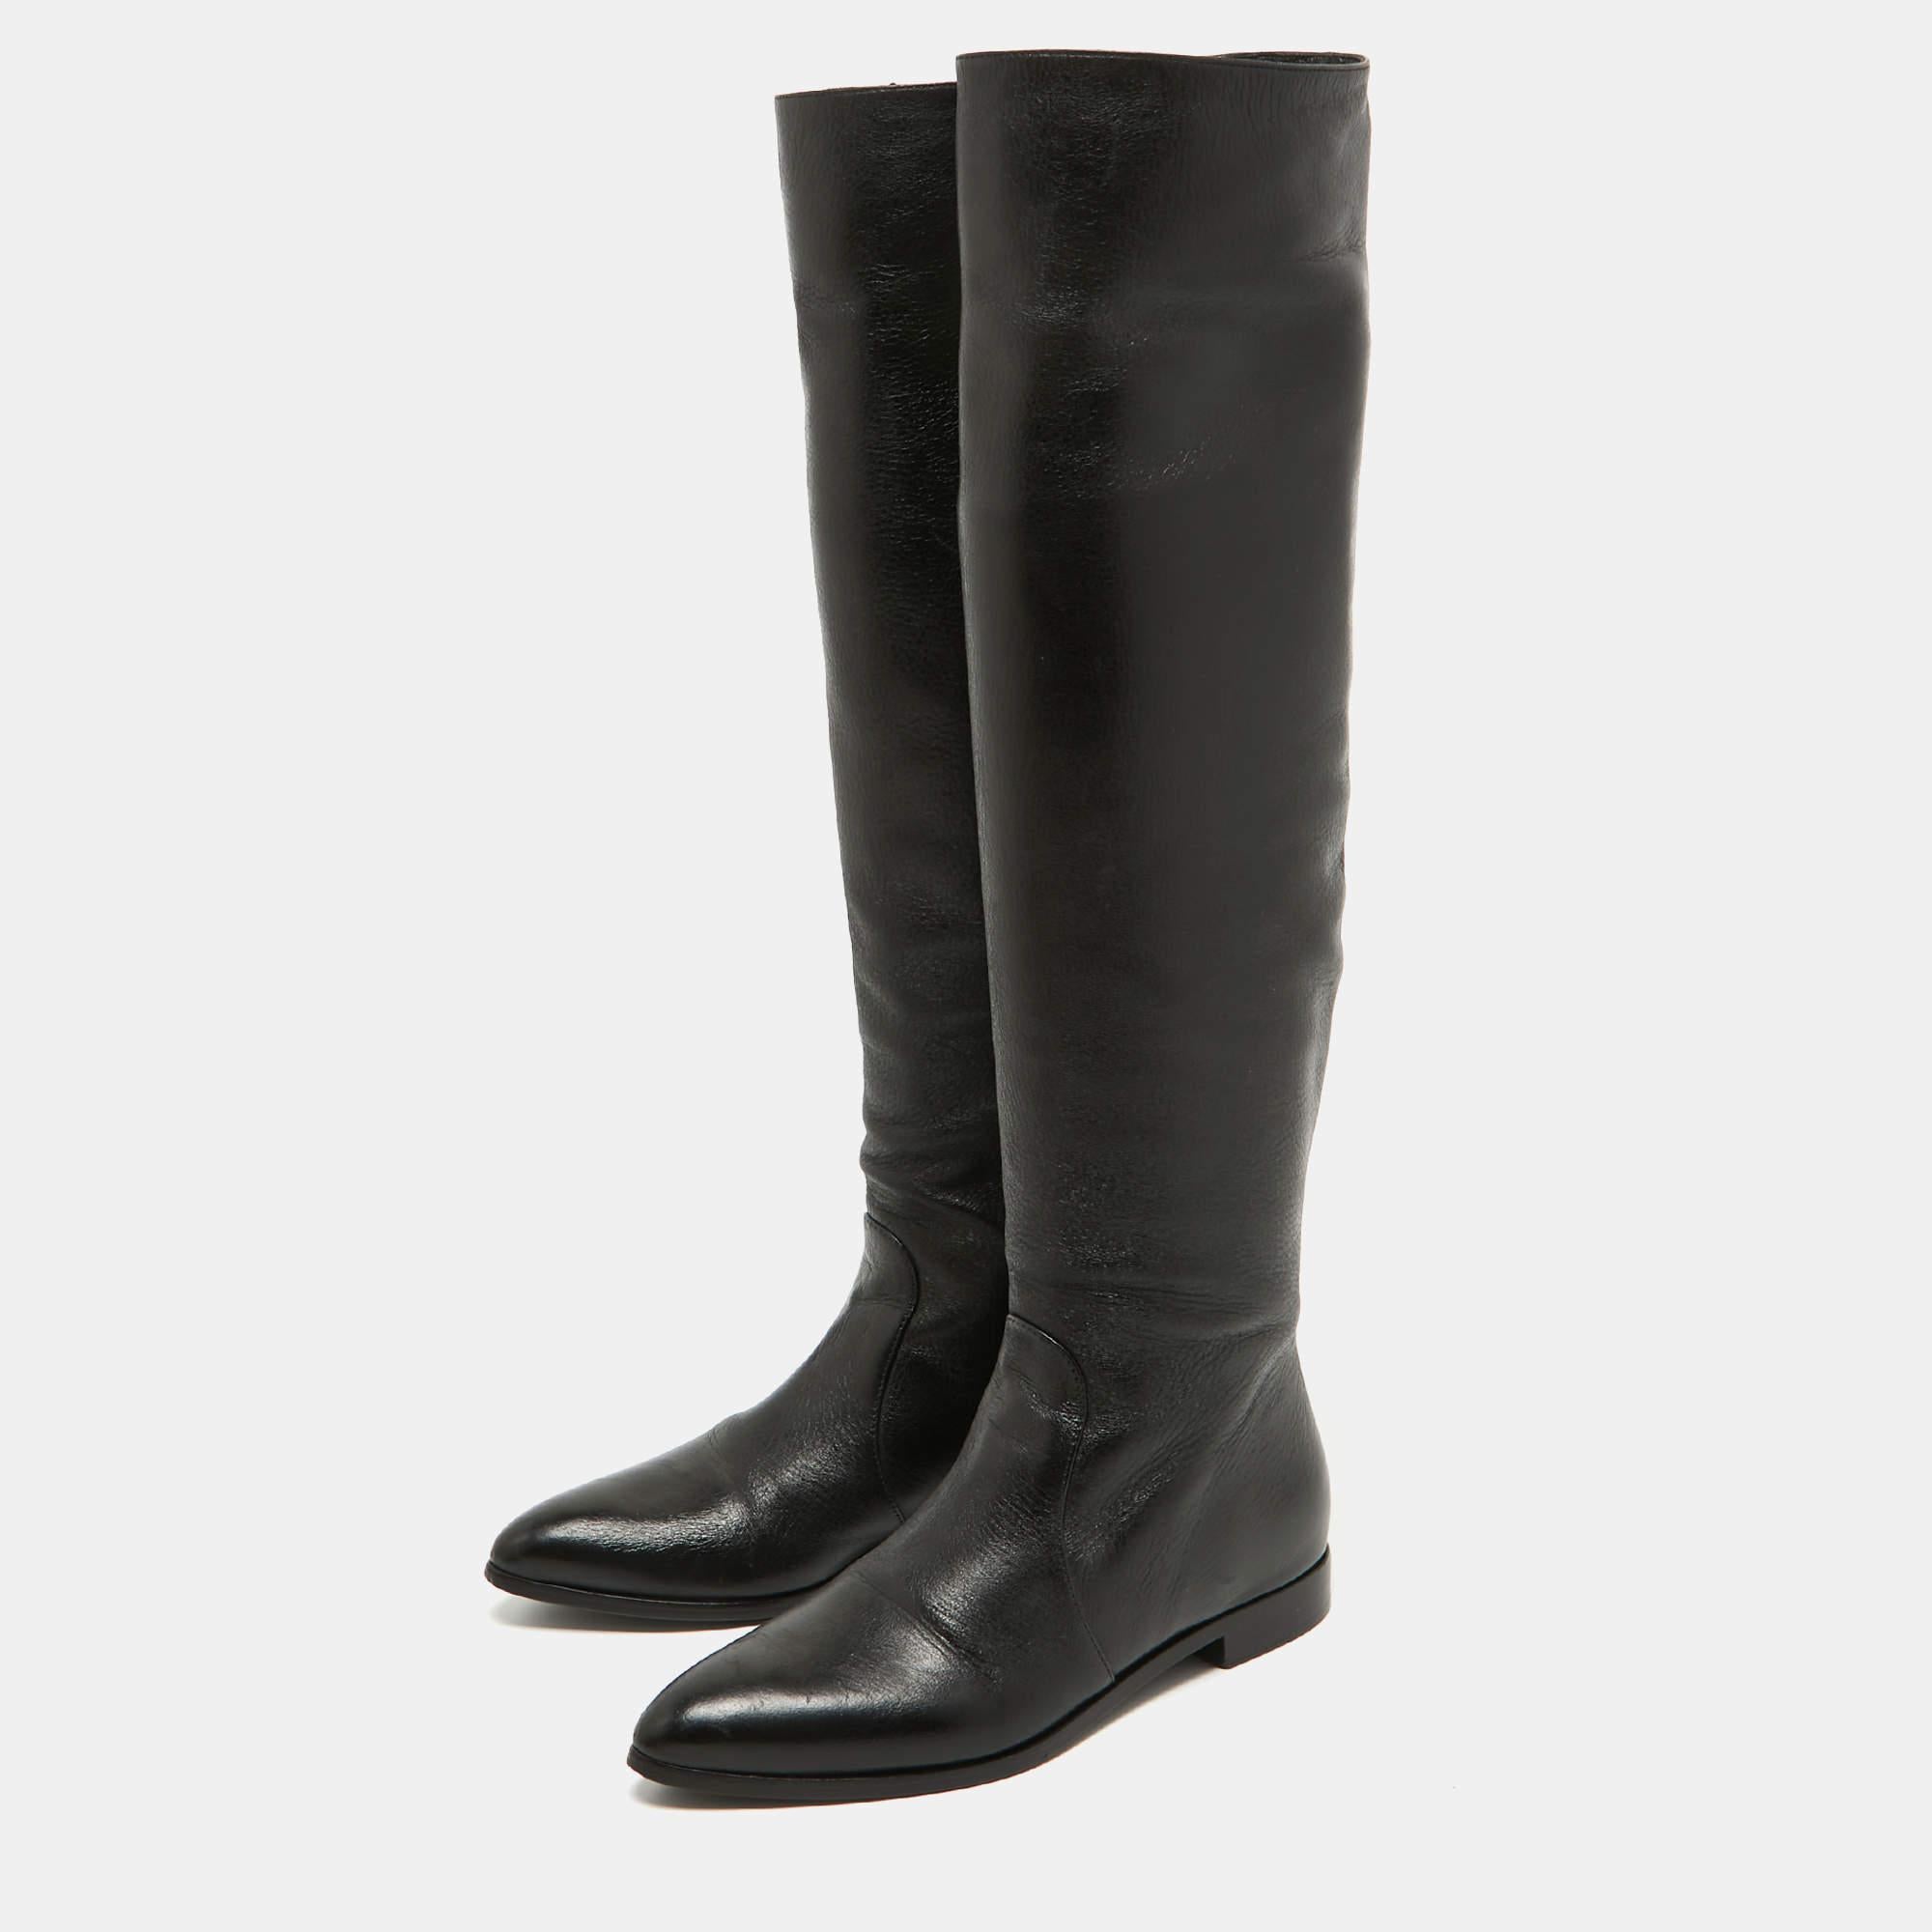 Prada Black Leather Knee High Block Heel Boots Size 36 In Good Condition For Sale In Dubai, Al Qouz 2